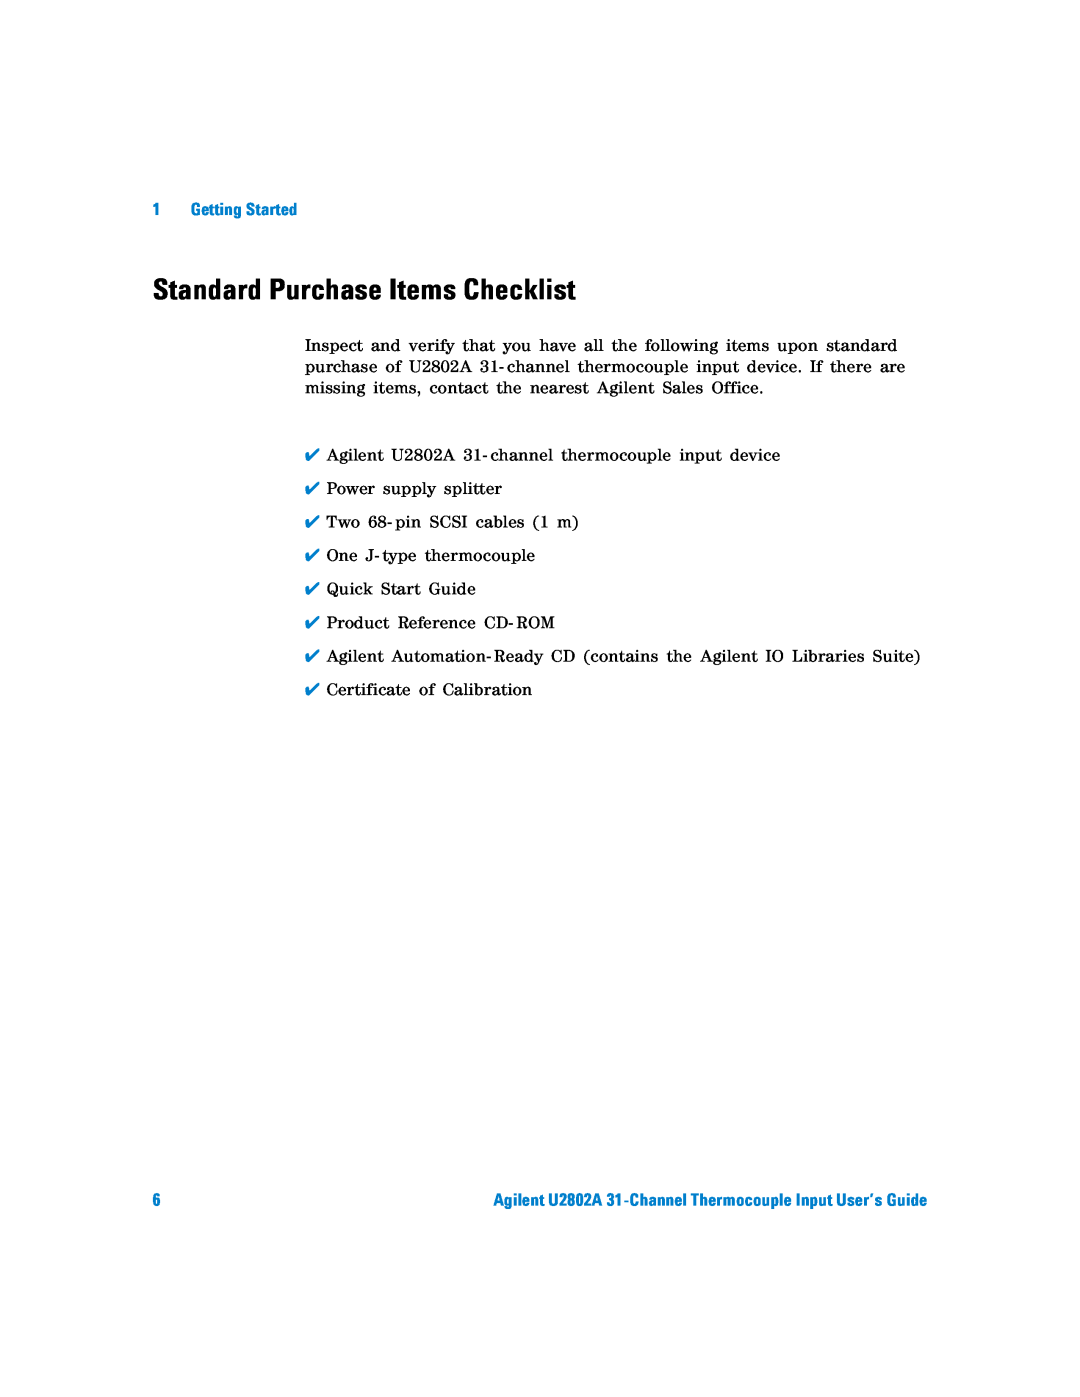 Agilent Technologies U2802A manual Standard Purchase Items Checklist, Getting Started 